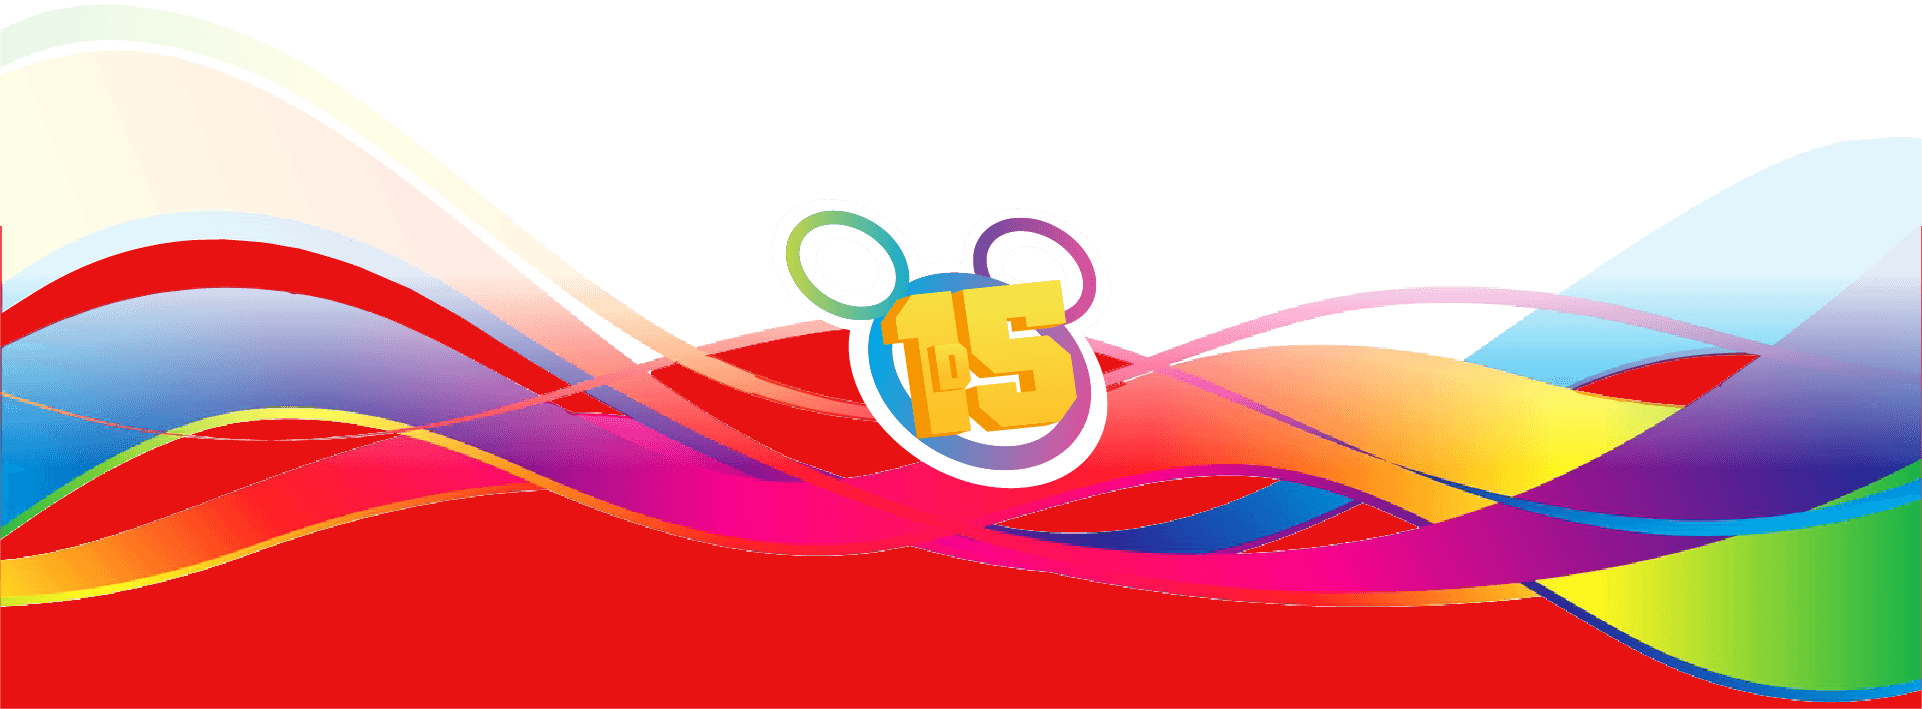 Adorno Disney 15